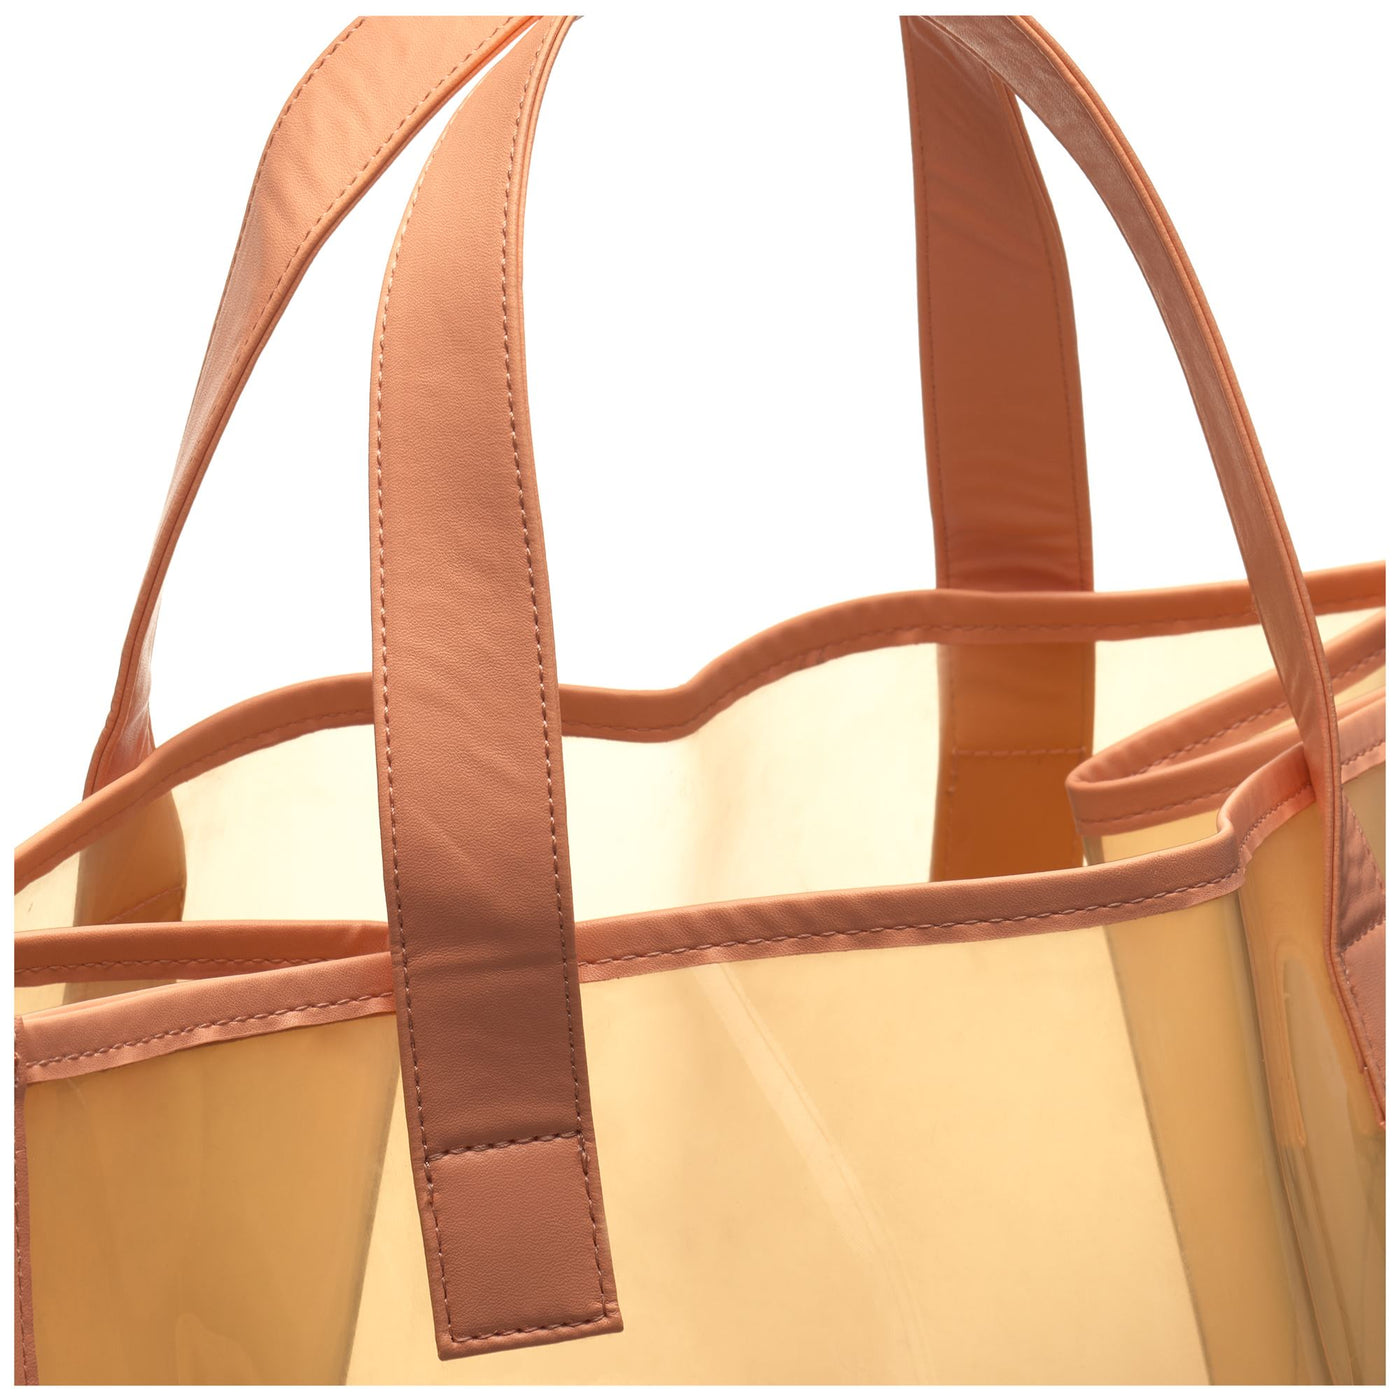 Bags Woman TRANSPARENT SHOPPING BAG Shopping Bag PINK PEACH-YELLOW LT Detail (jpg Rgb)			